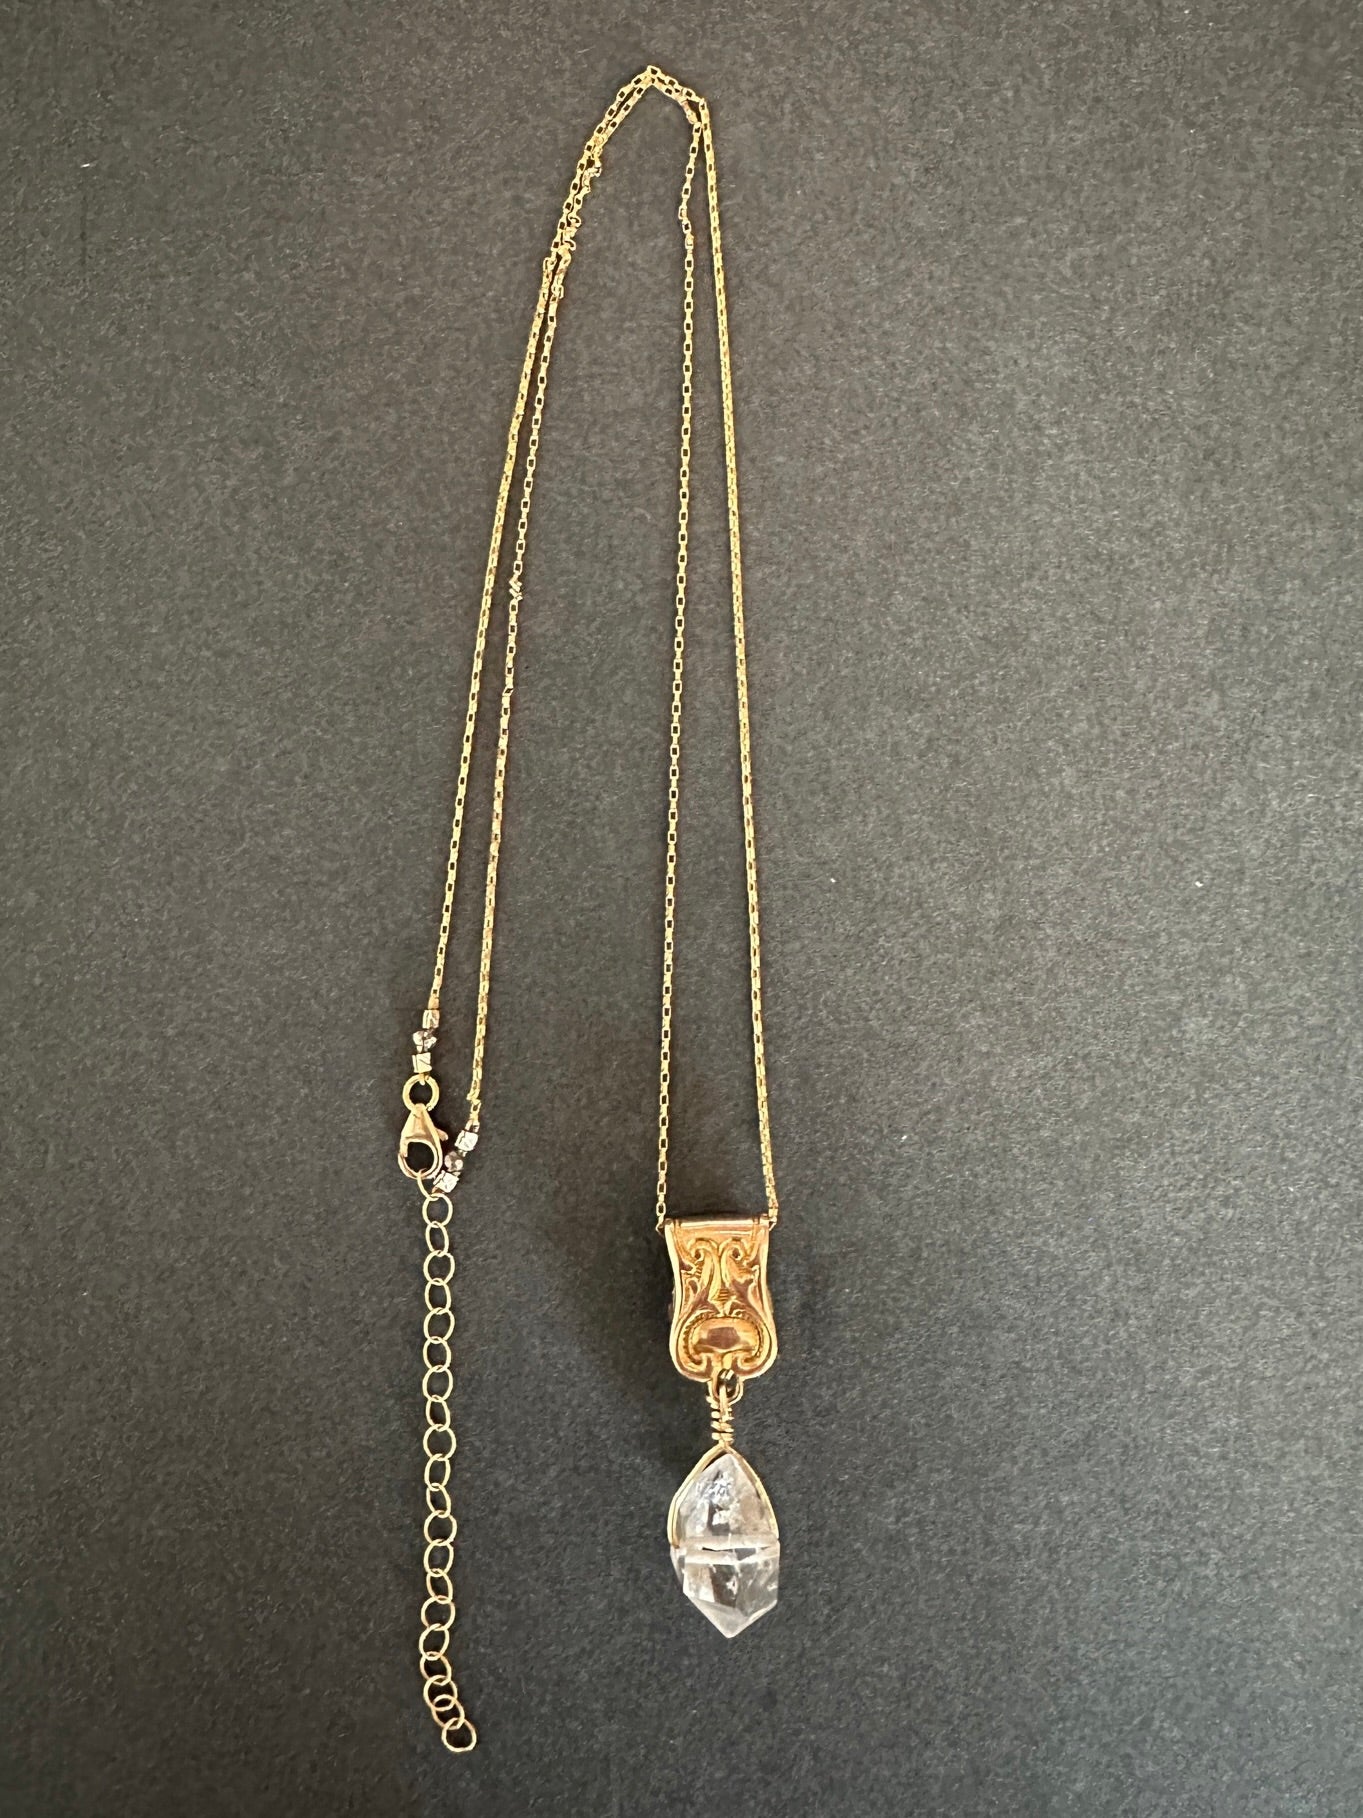 012. Herkimer Diamond Necklace